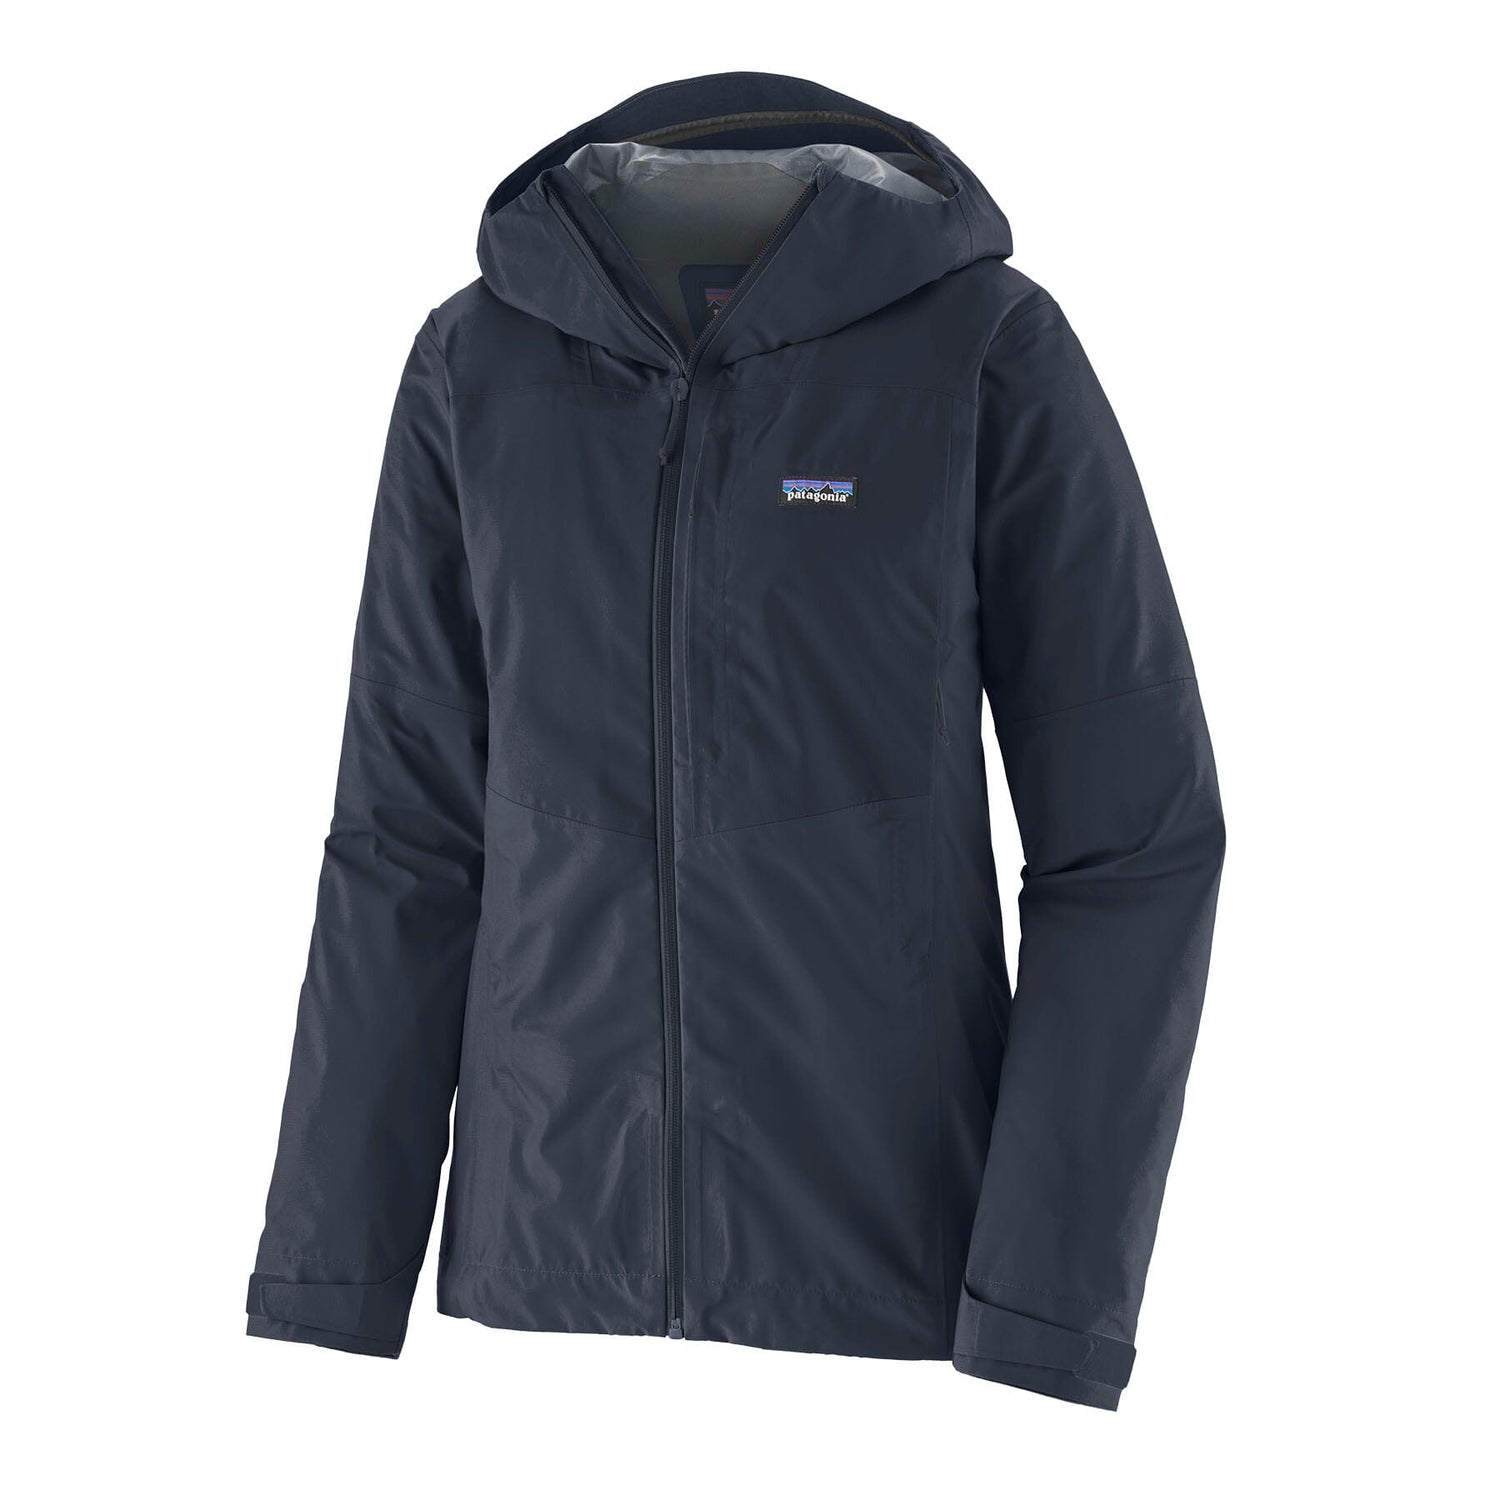 Patagonia - W's Boulder Fork Rain Jacket - Recycled polyester - Weekendbee - sustainable sportswear